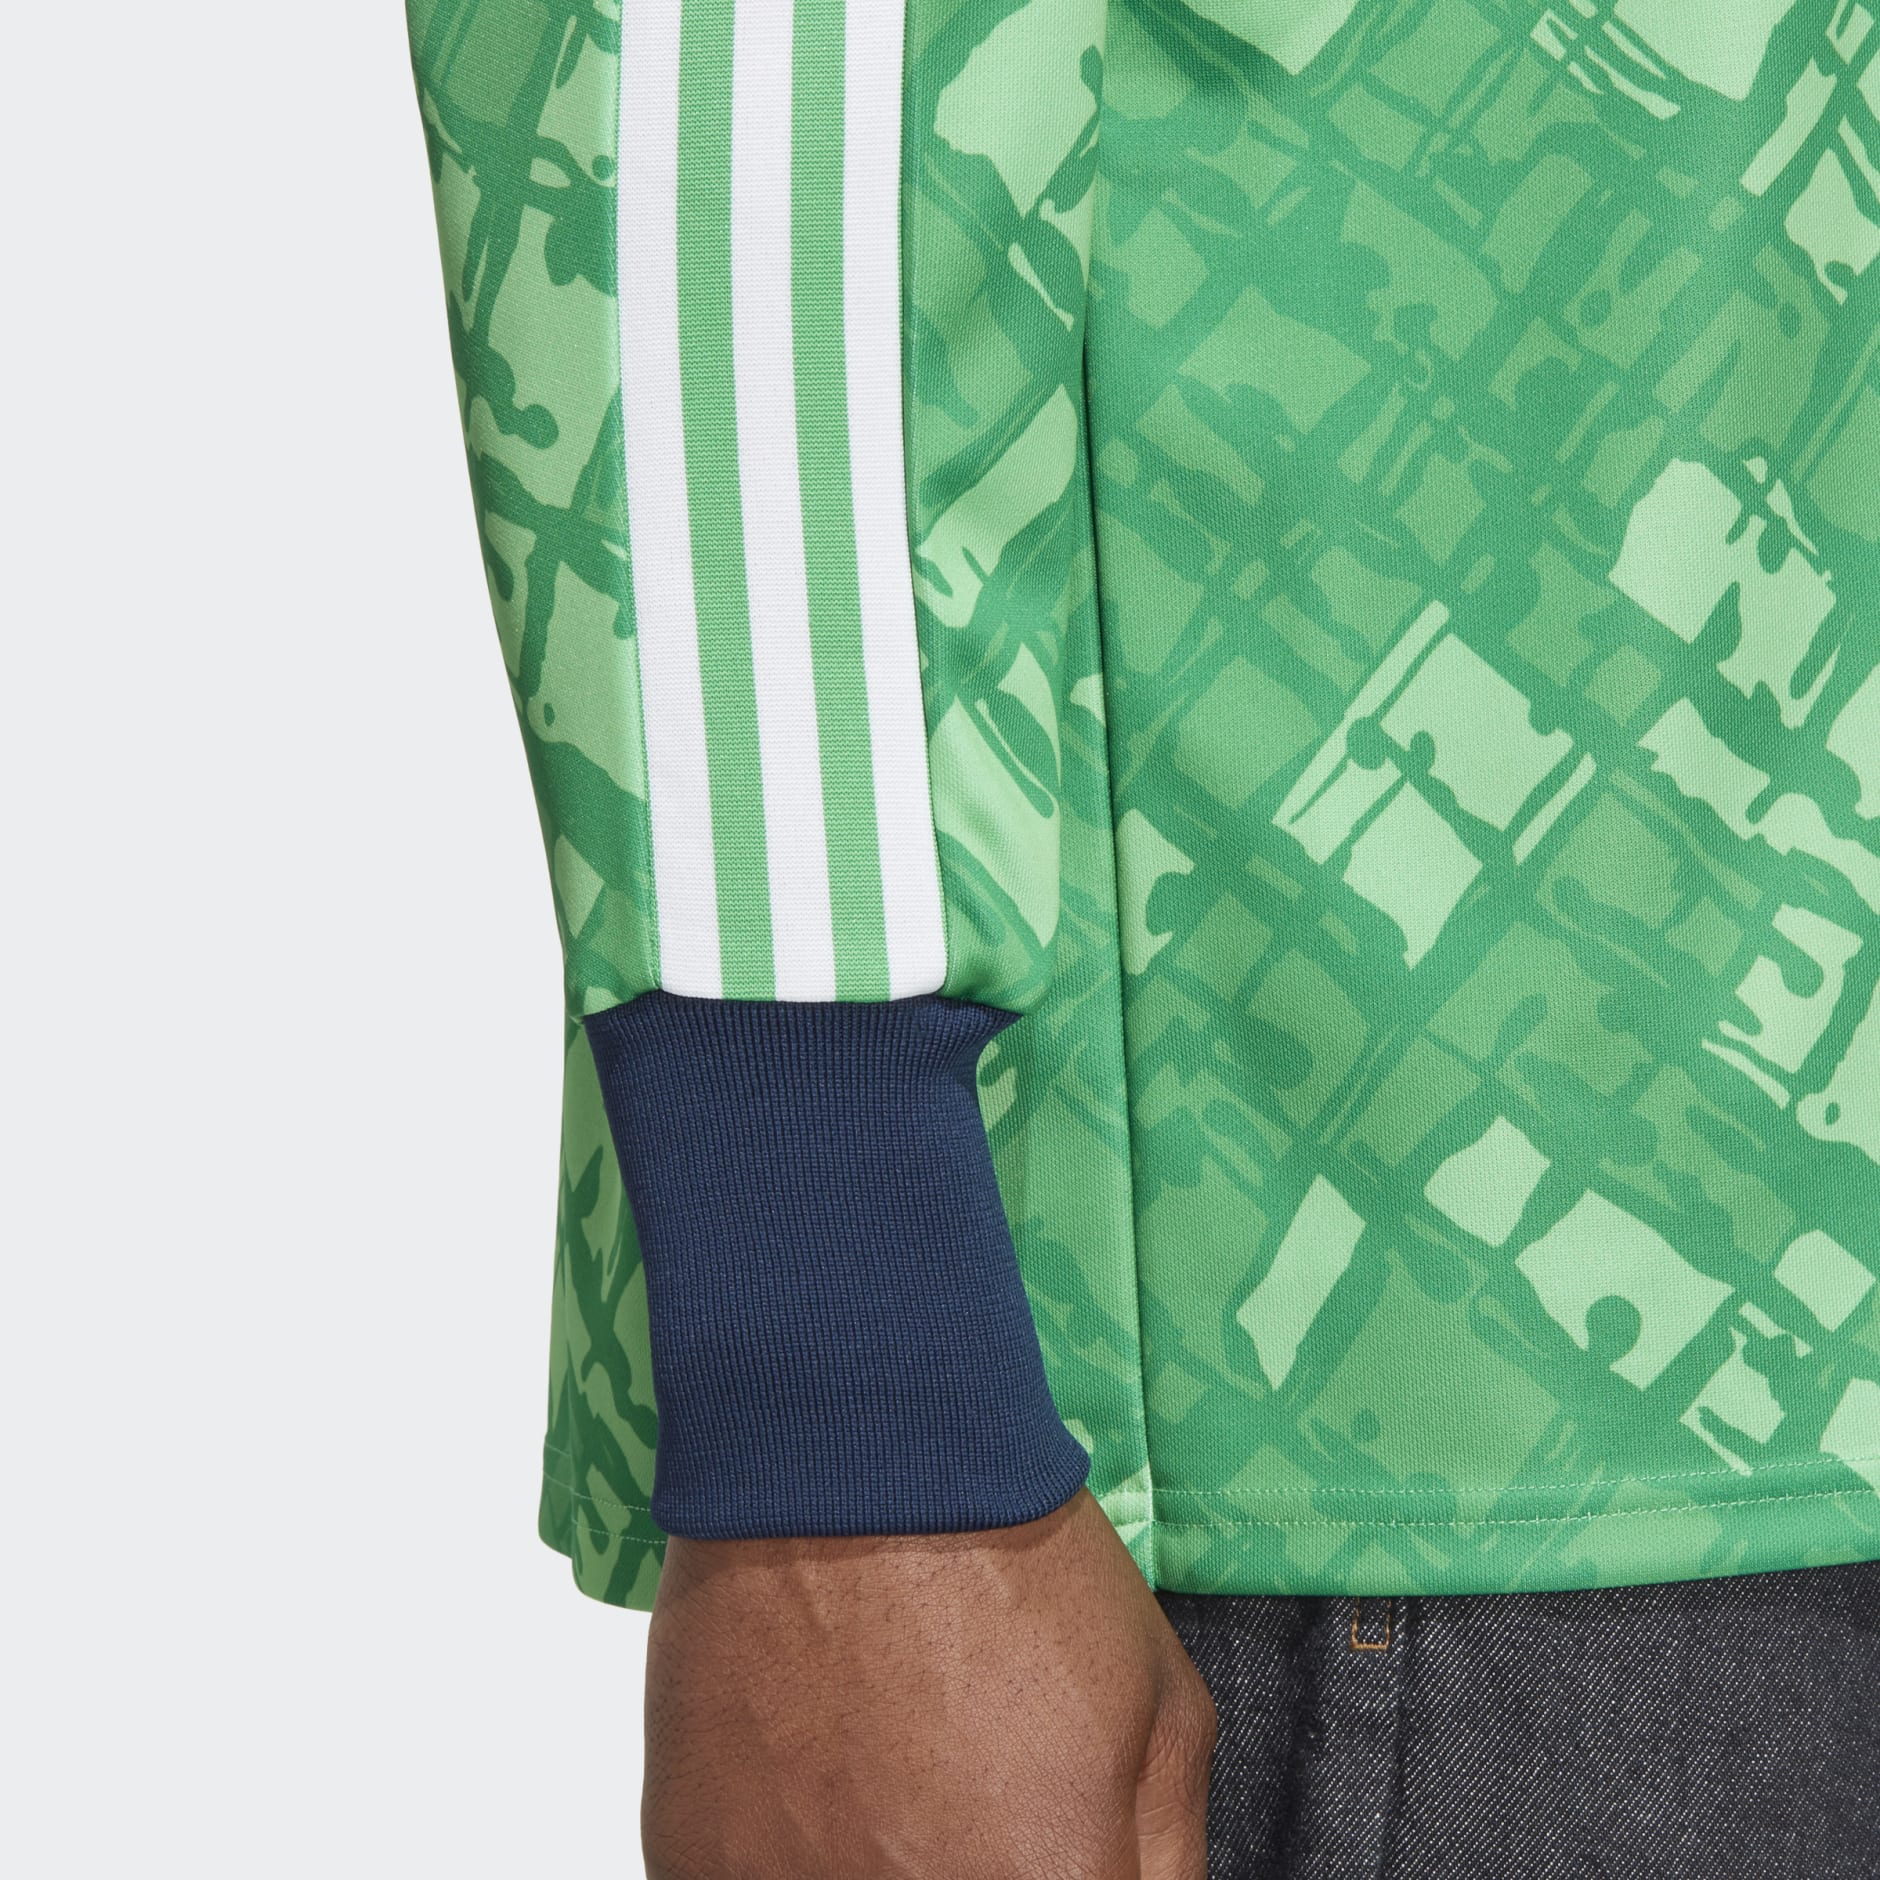 Men's Adidas Green Arsenal Authentic Football Icon Goalkeeper Jersey